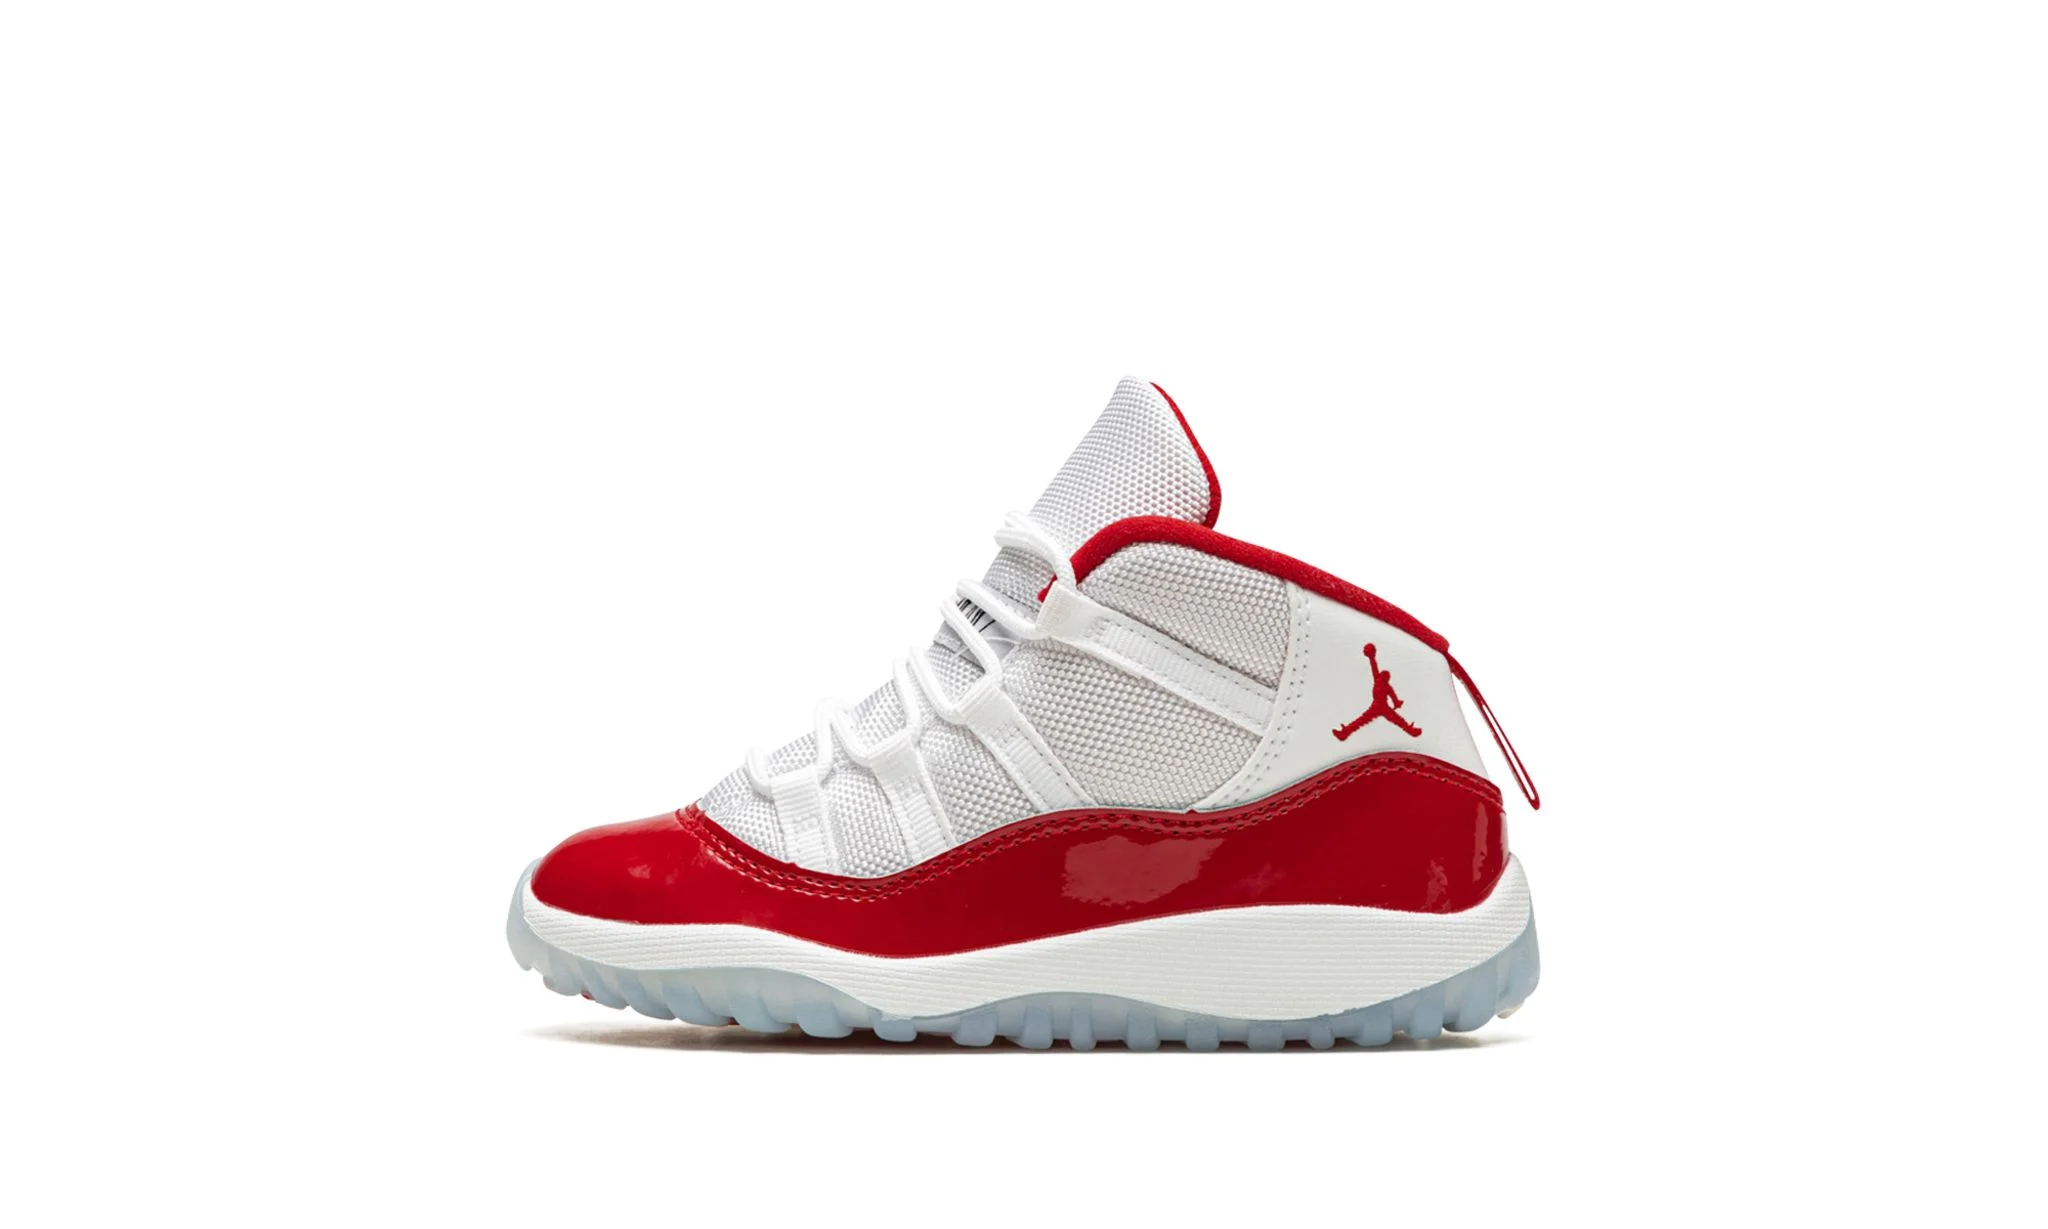 Air Jordan Retro 11 (TD) “Cherry”